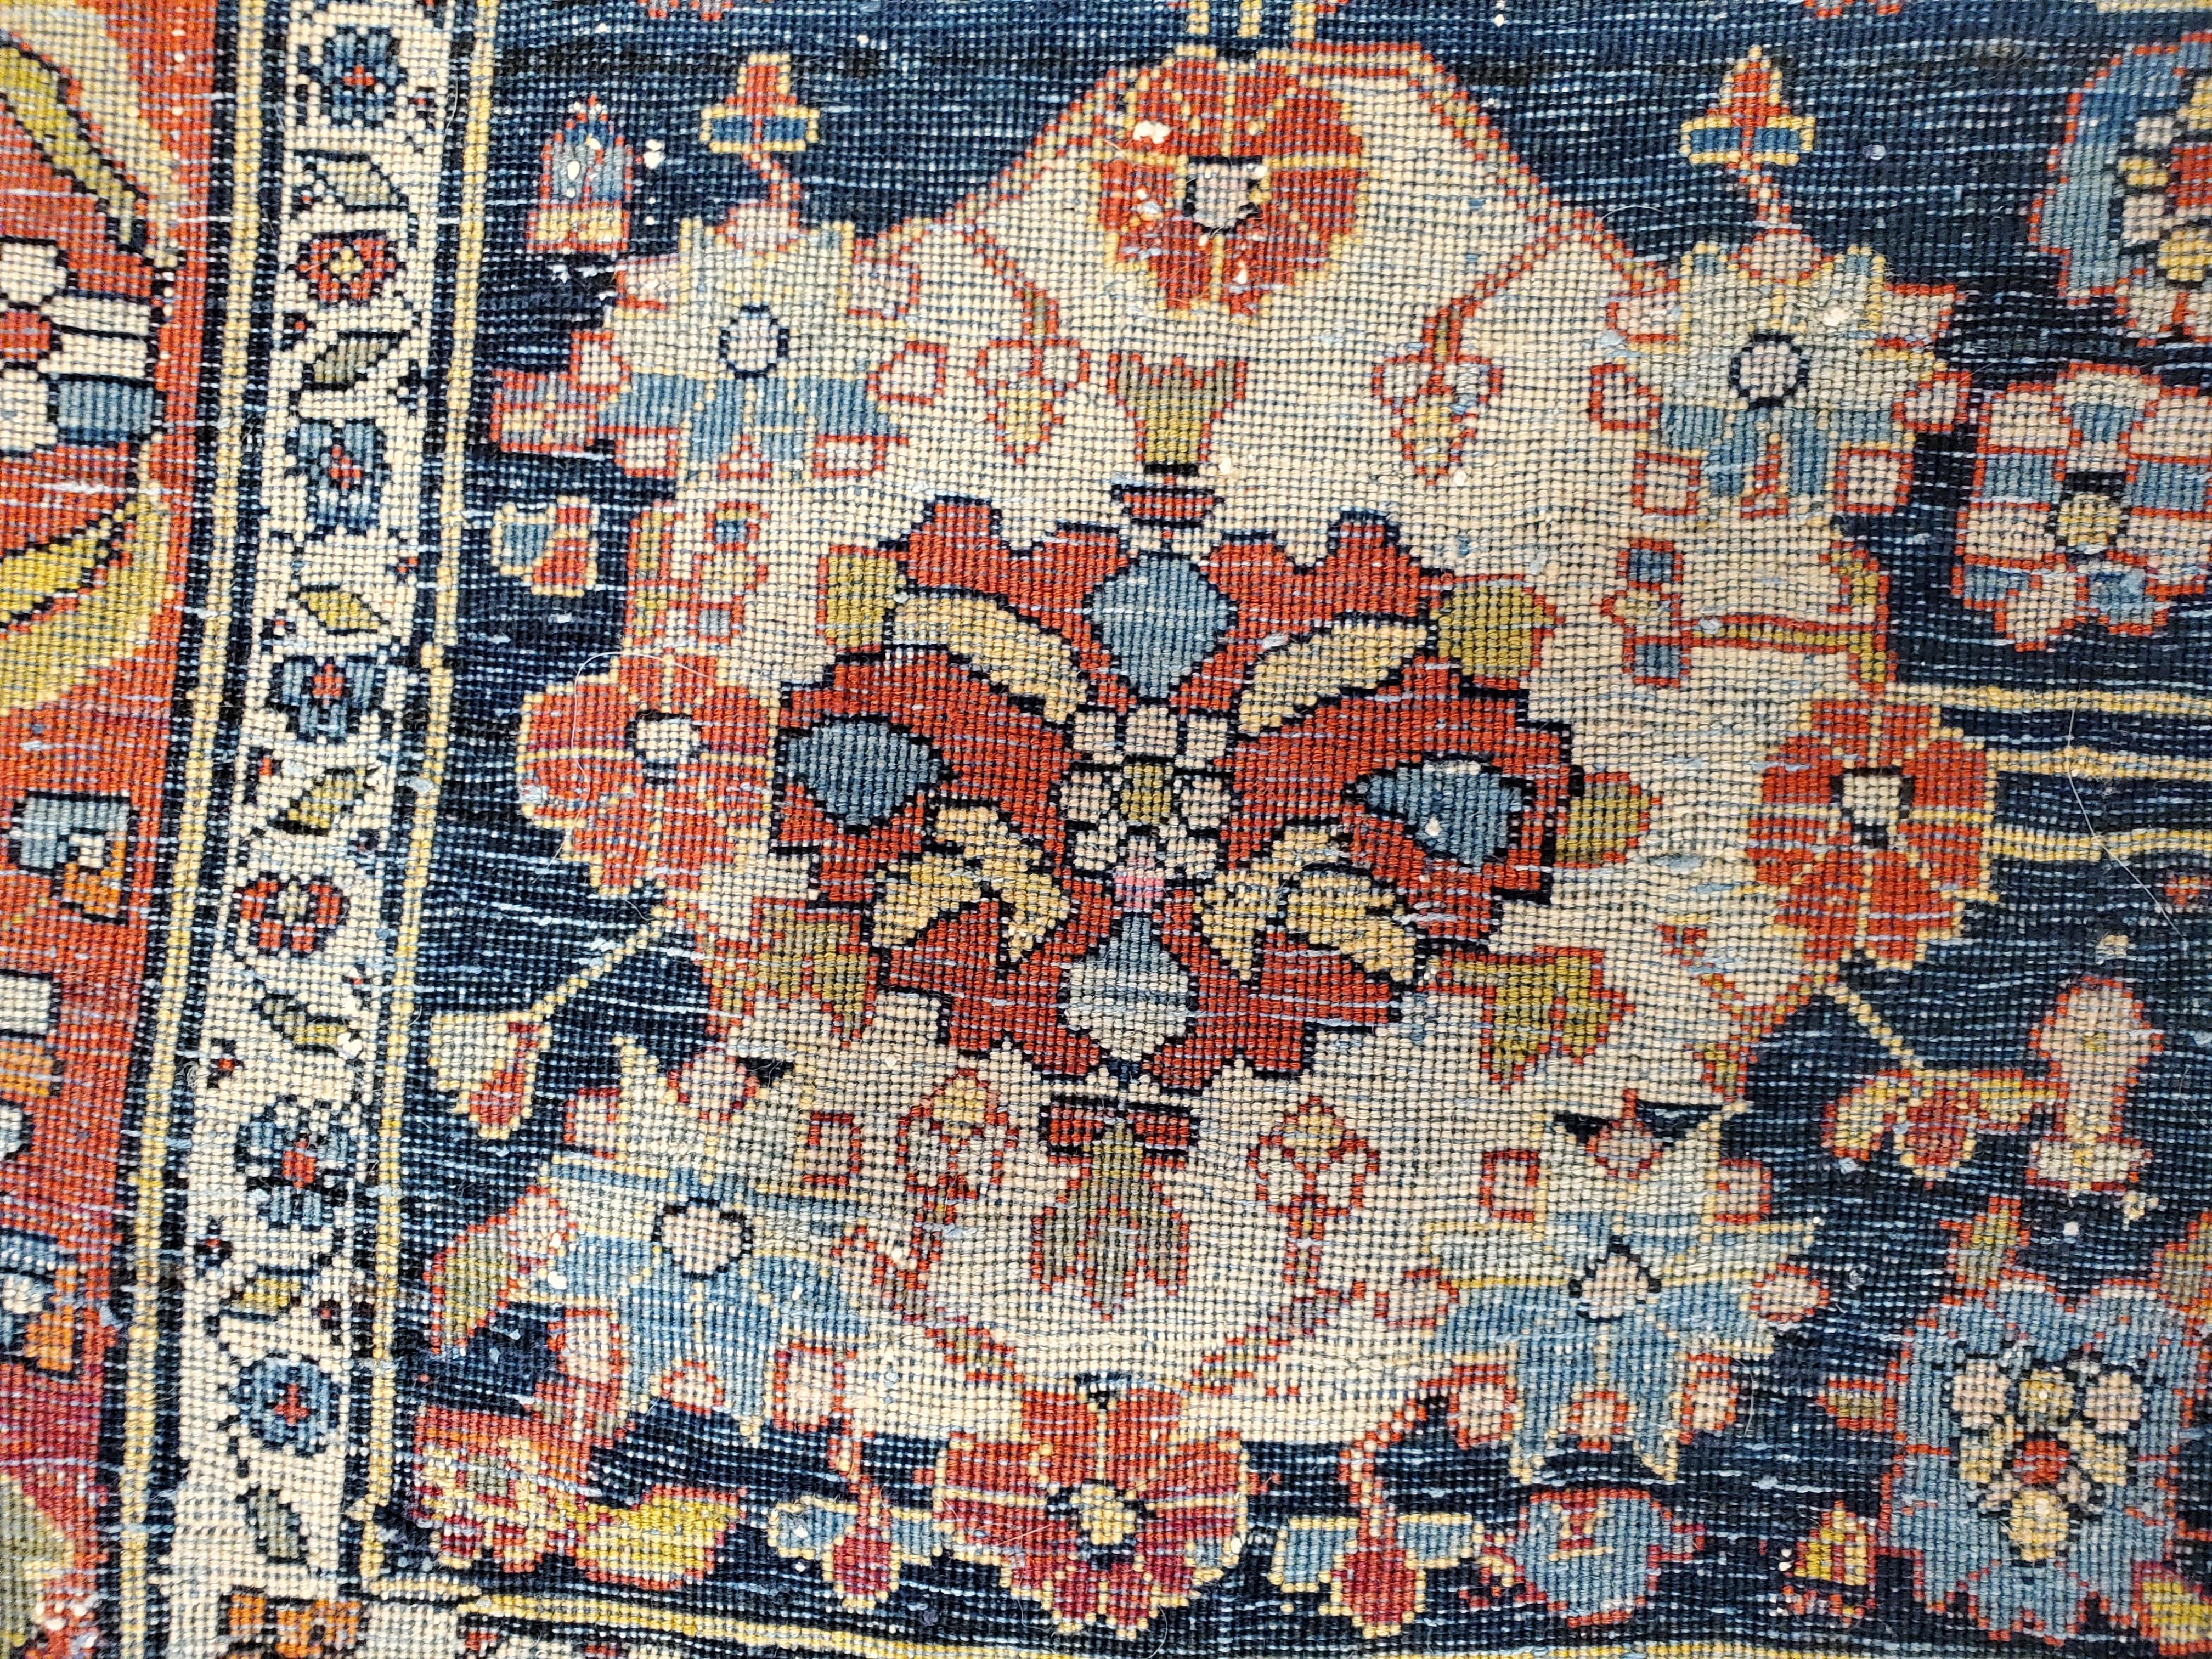 Antique Persian Mohtasham Kashan Carpet, Traditional, Ivory, Blue, Green, Reds 11